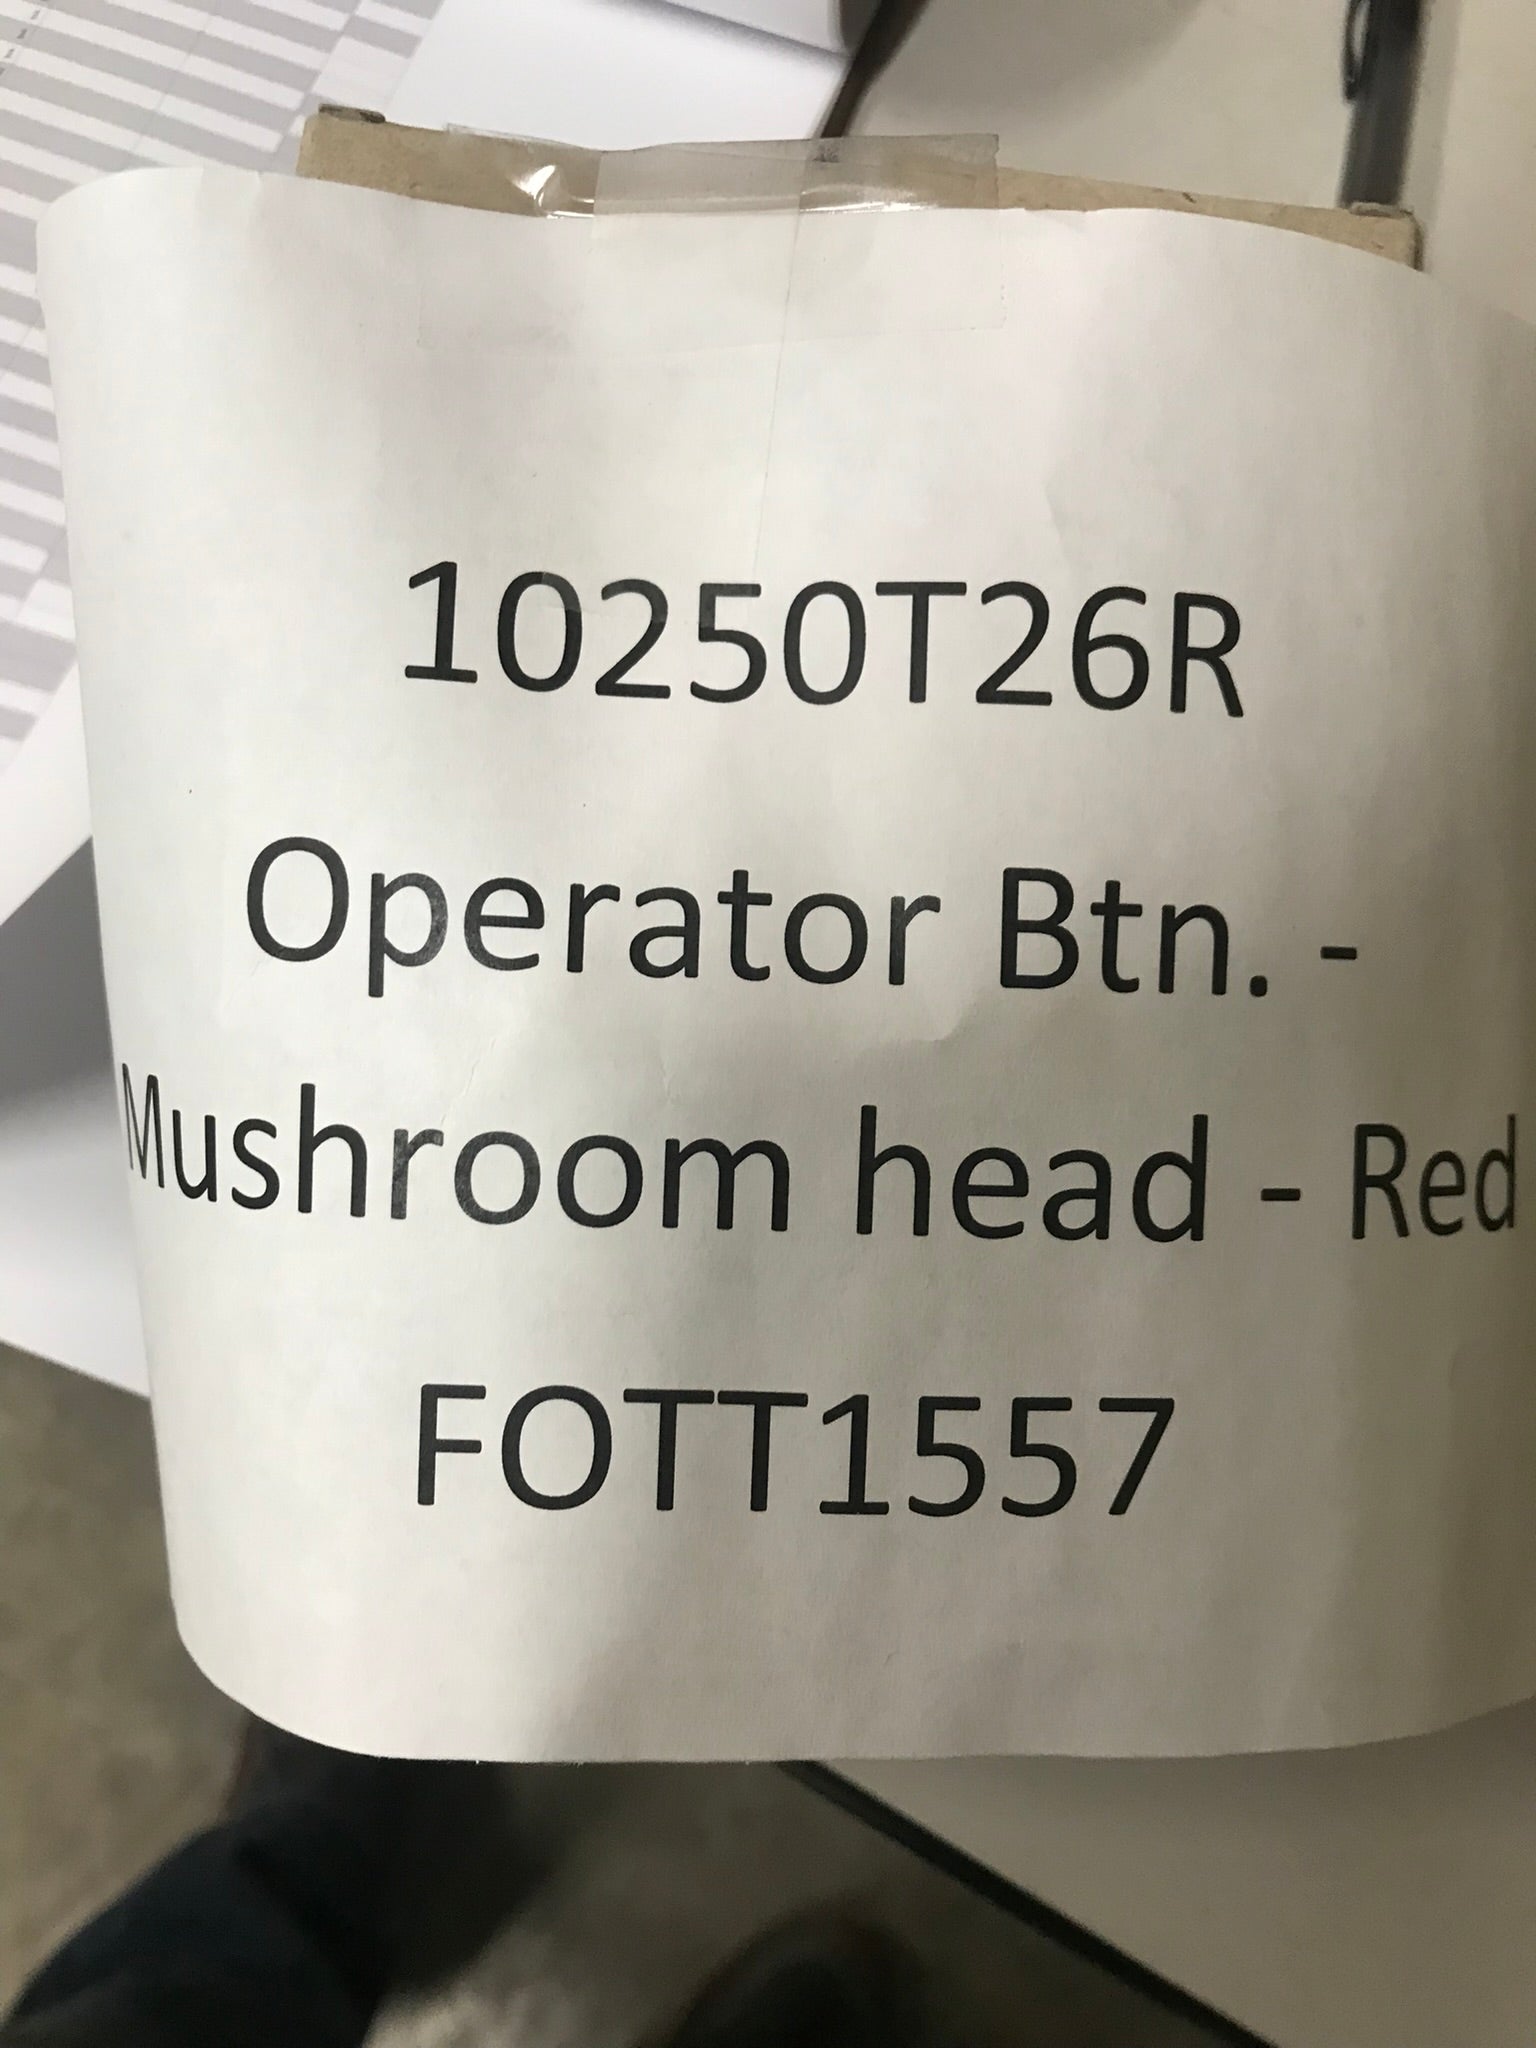 Operator Button. - Mushroom head - Red